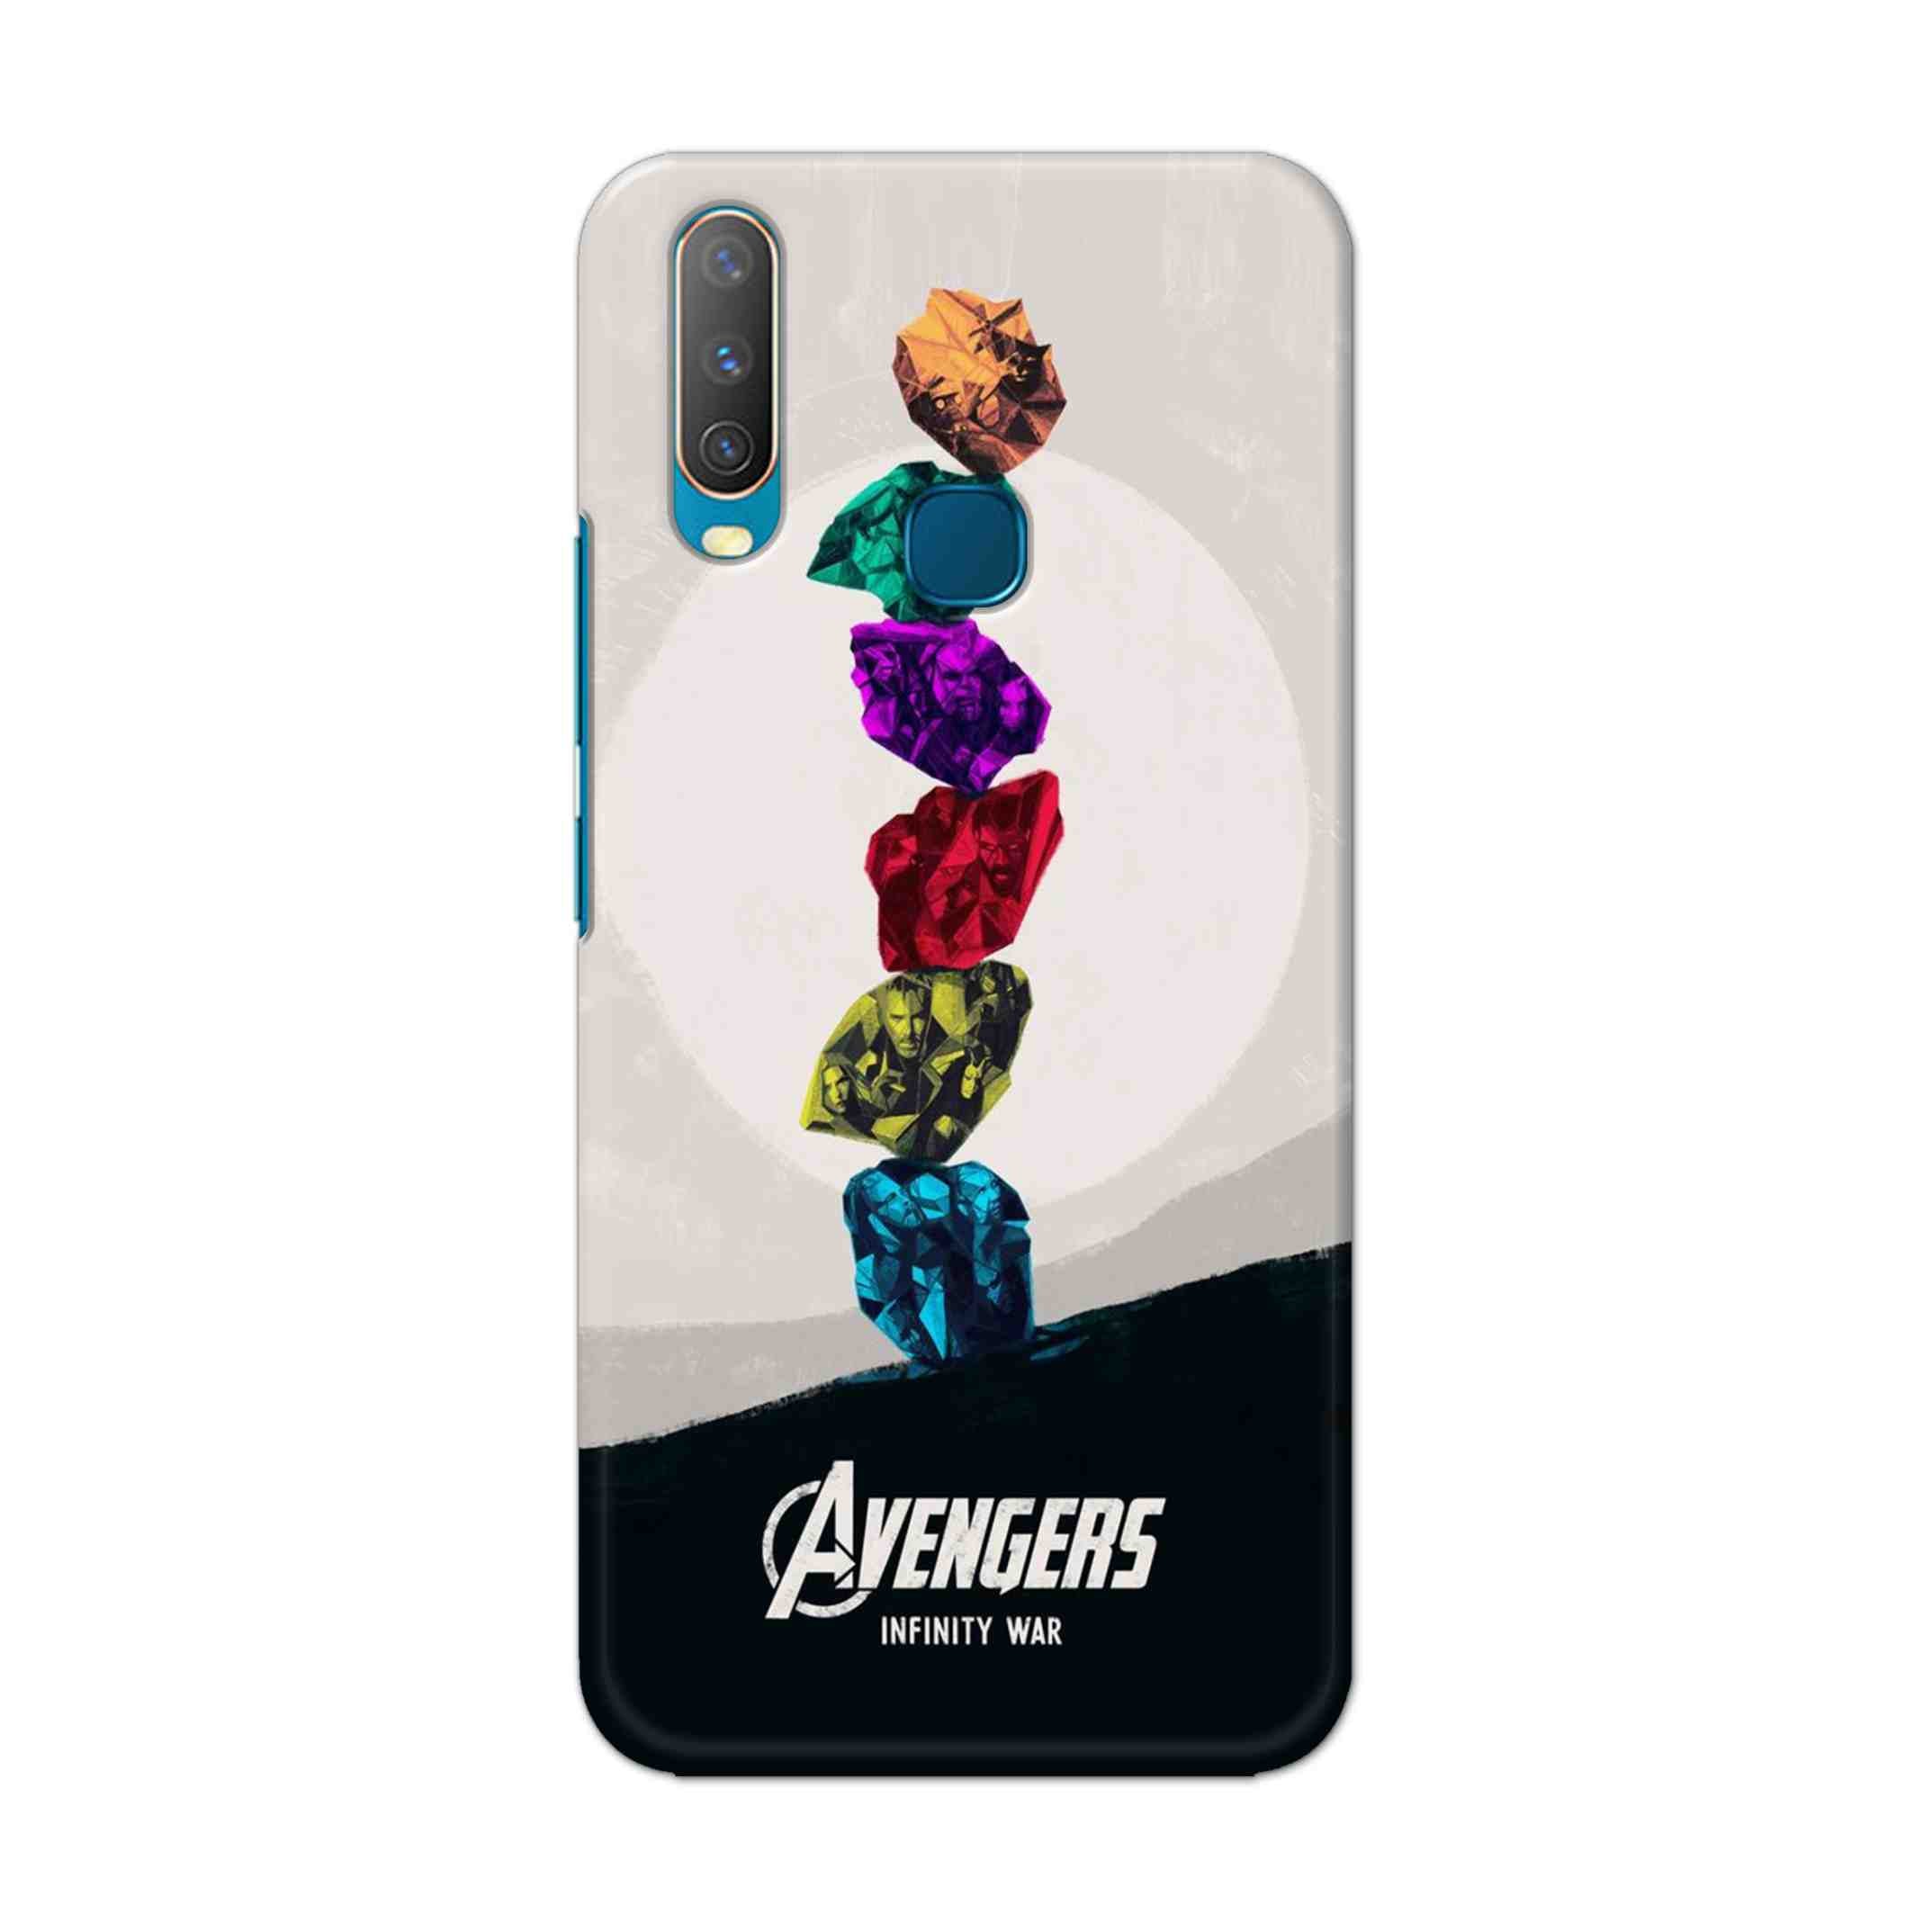 Buy Avengers Stone Hard Back Mobile Phone Case Cover For Vivo Y17 / U10 Online